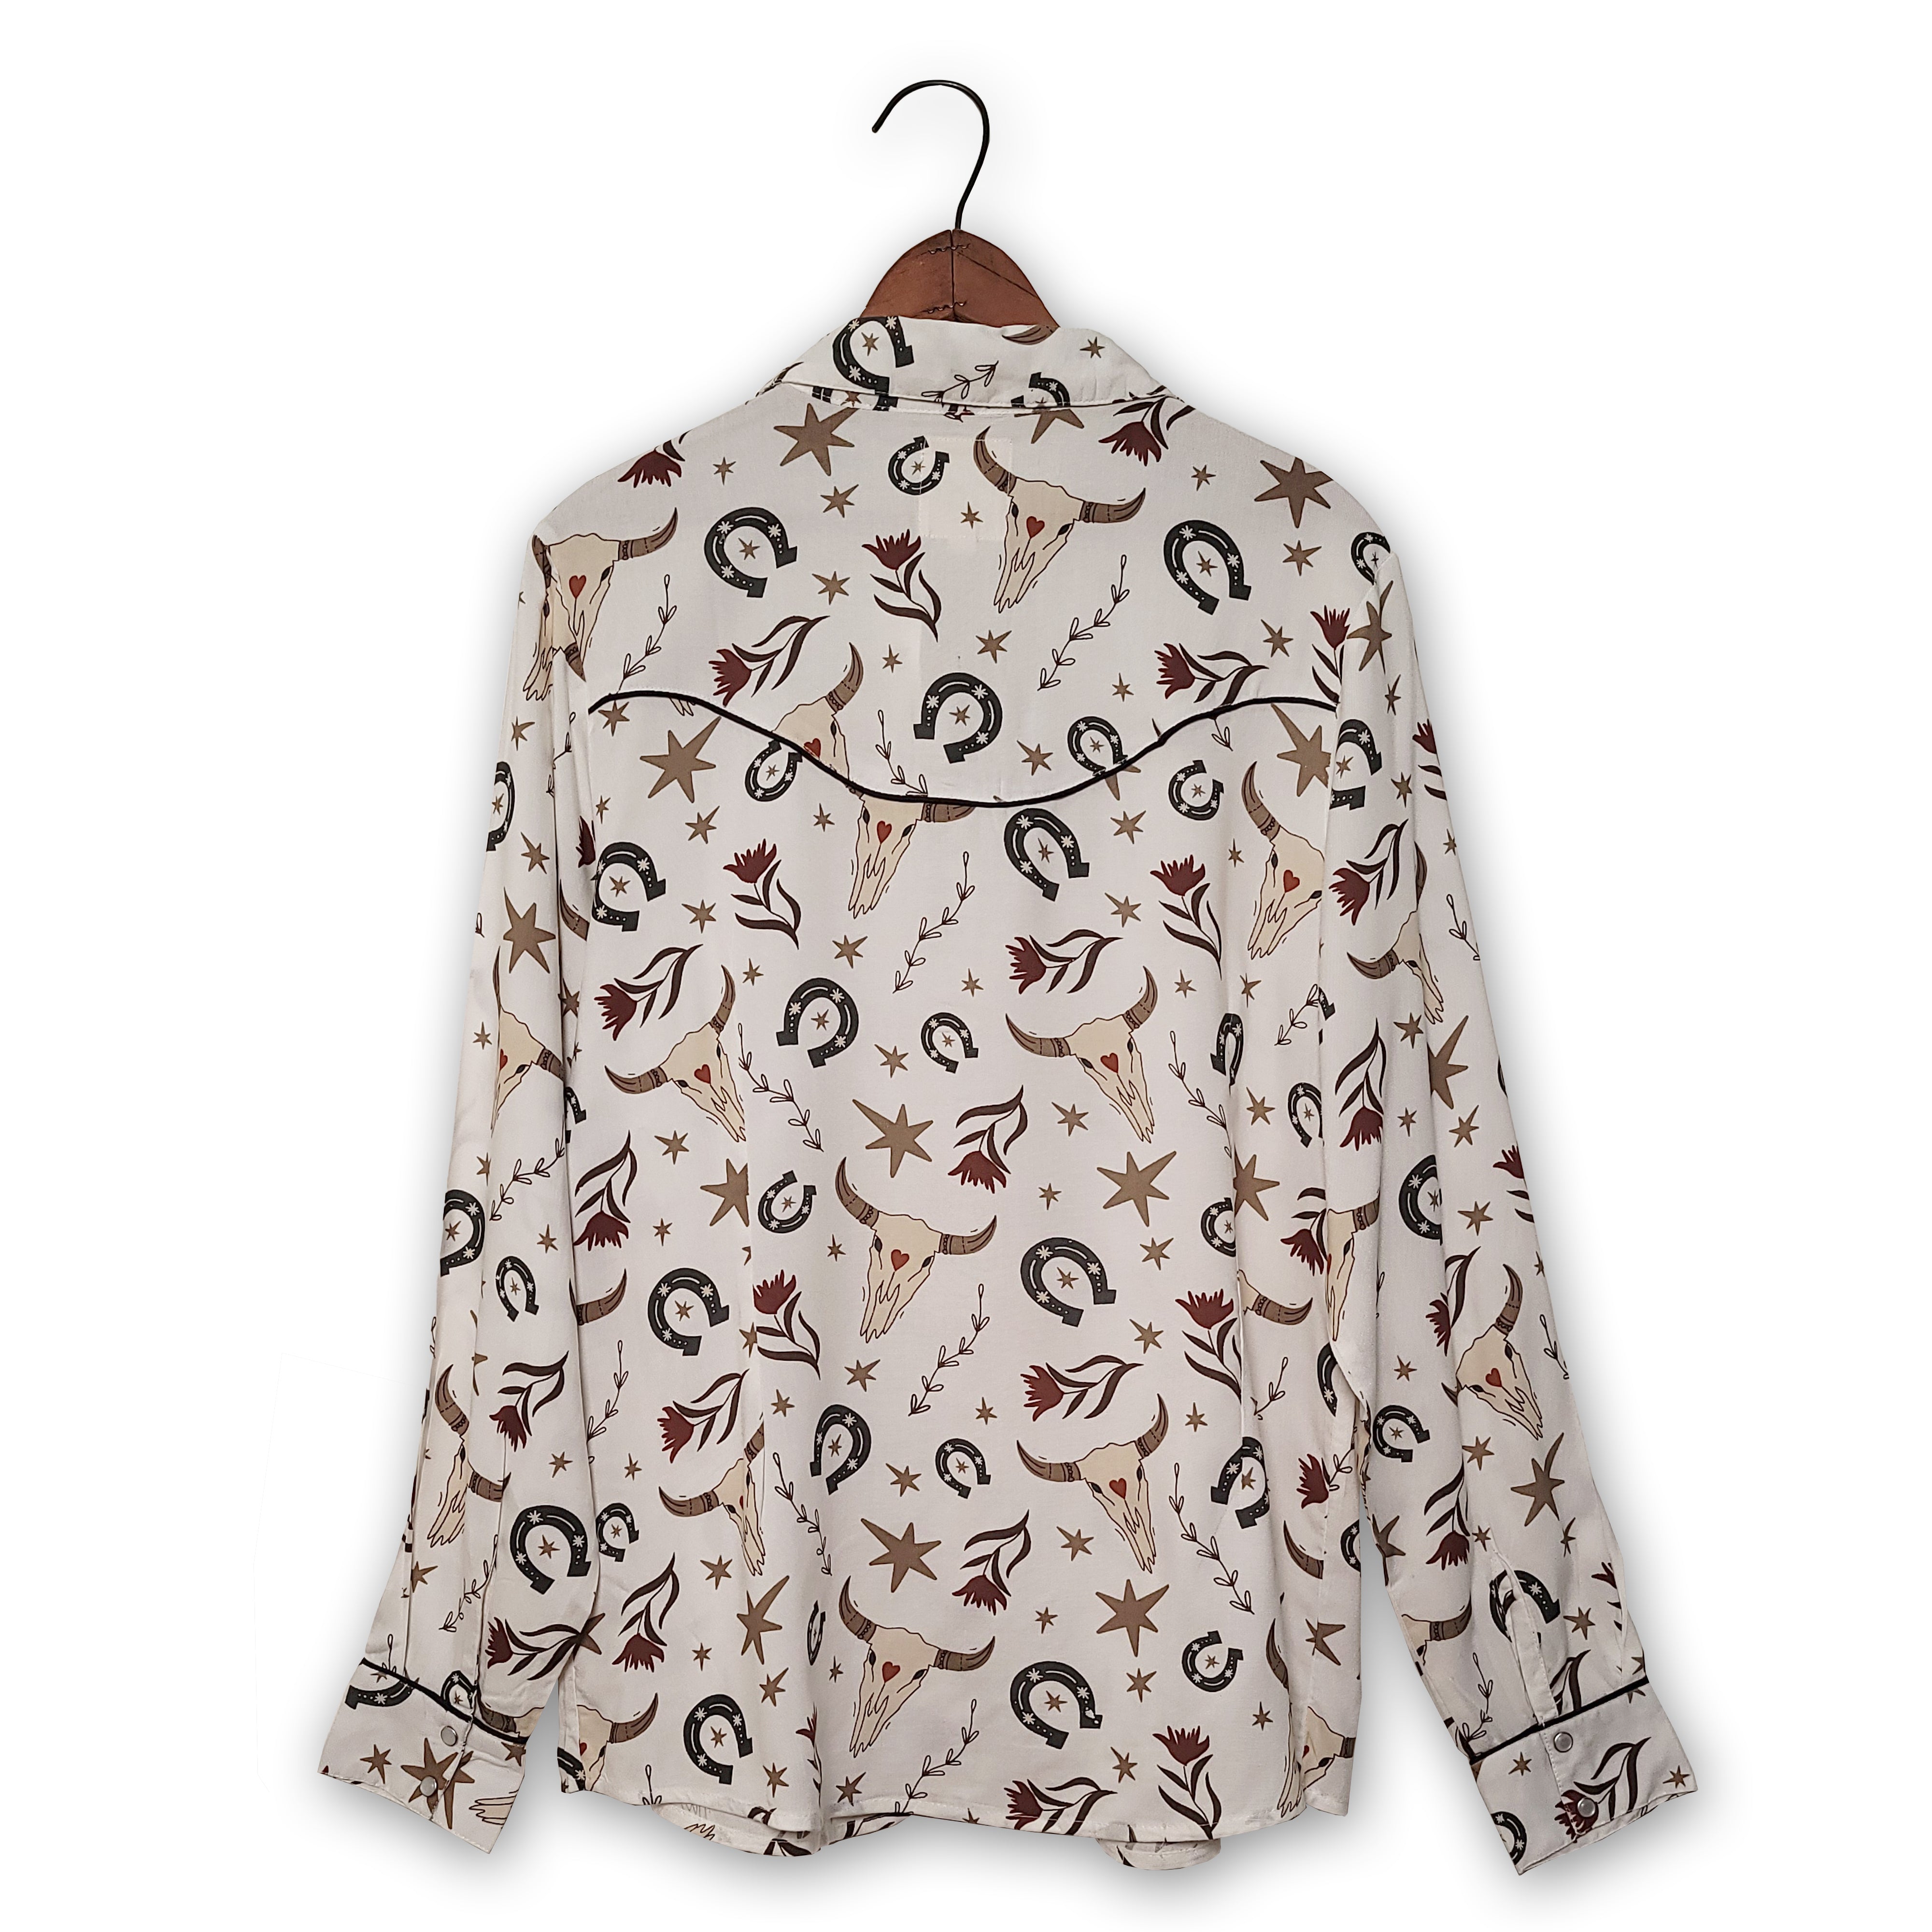 Steer Skull Snap Long Sleeve Shirt by Cotton & Rye #CRW604N